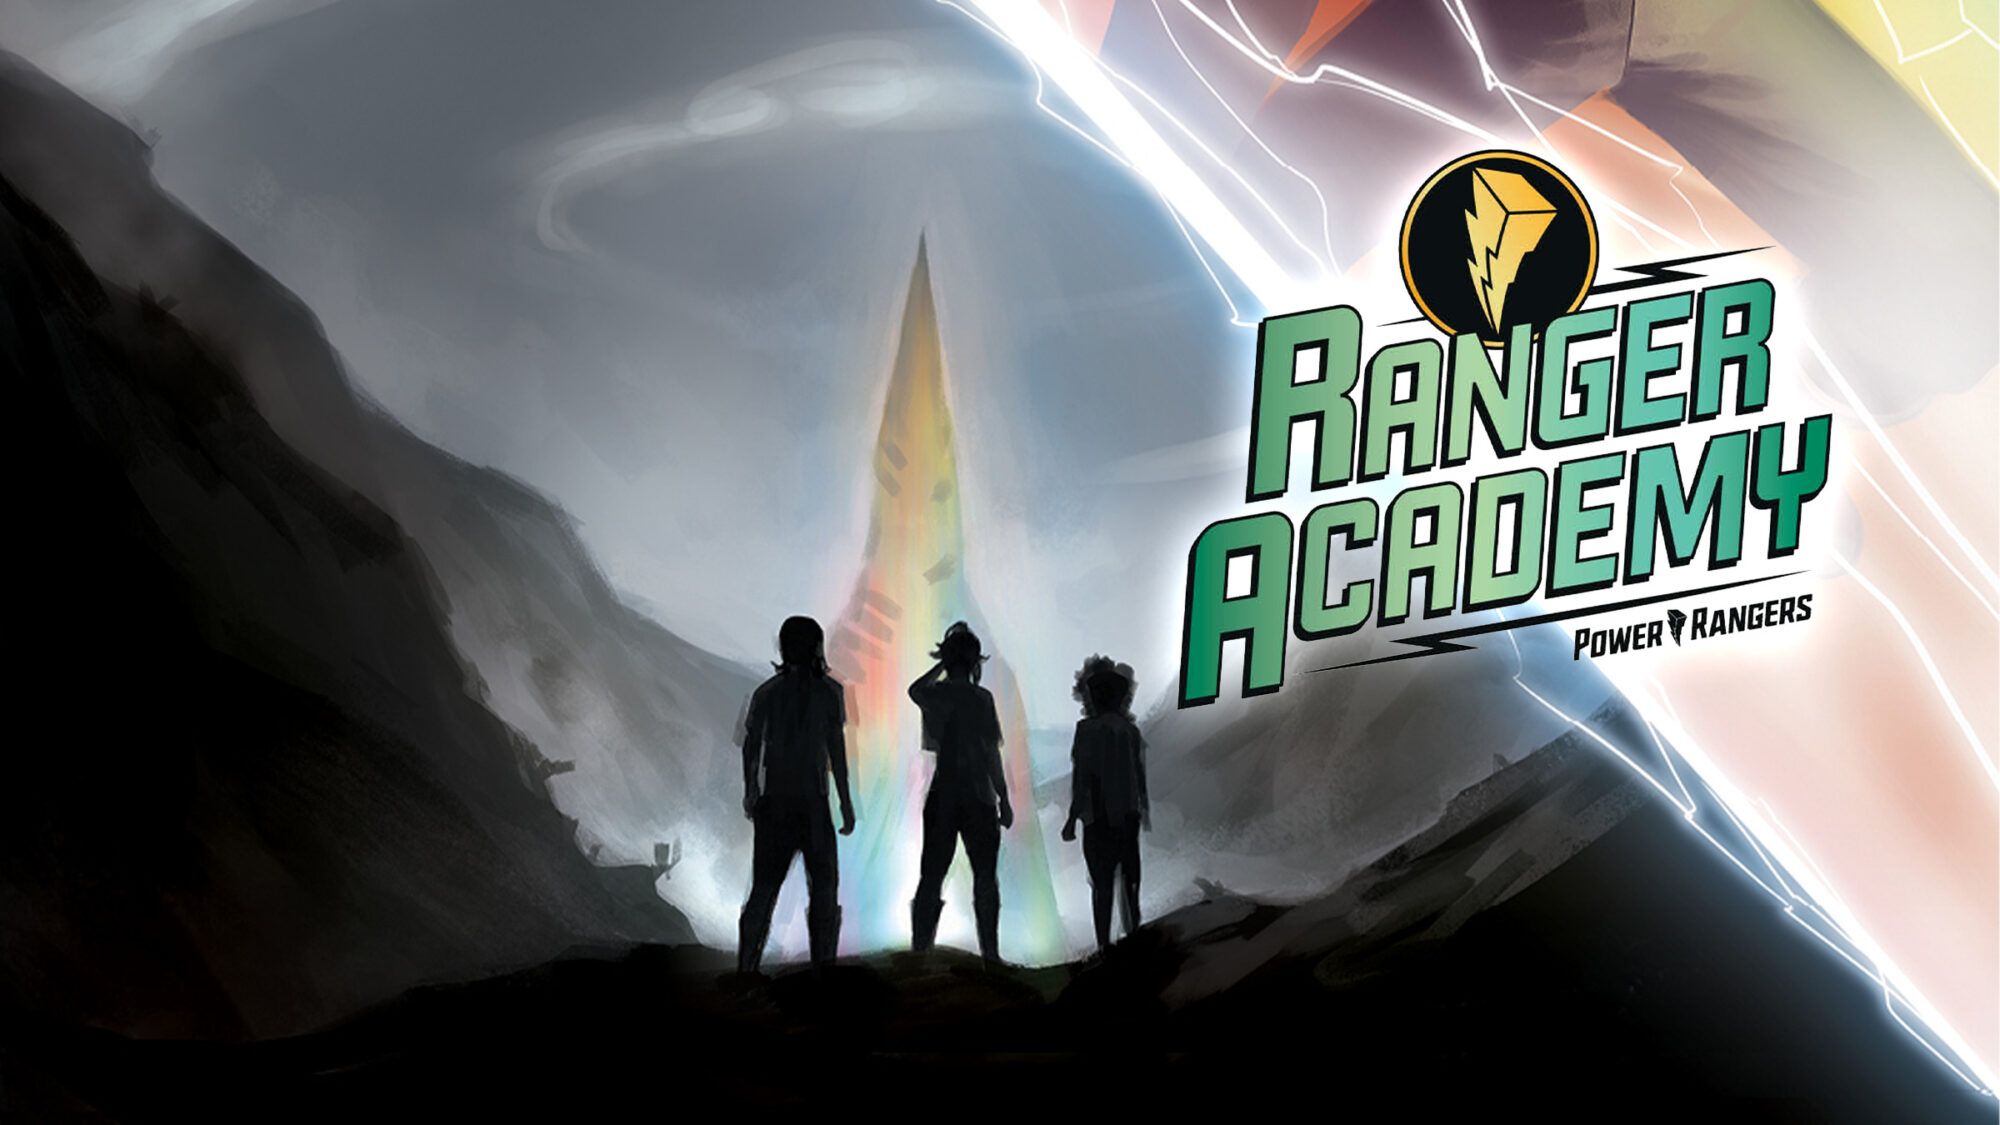 Power Rangers: Ranger Academy